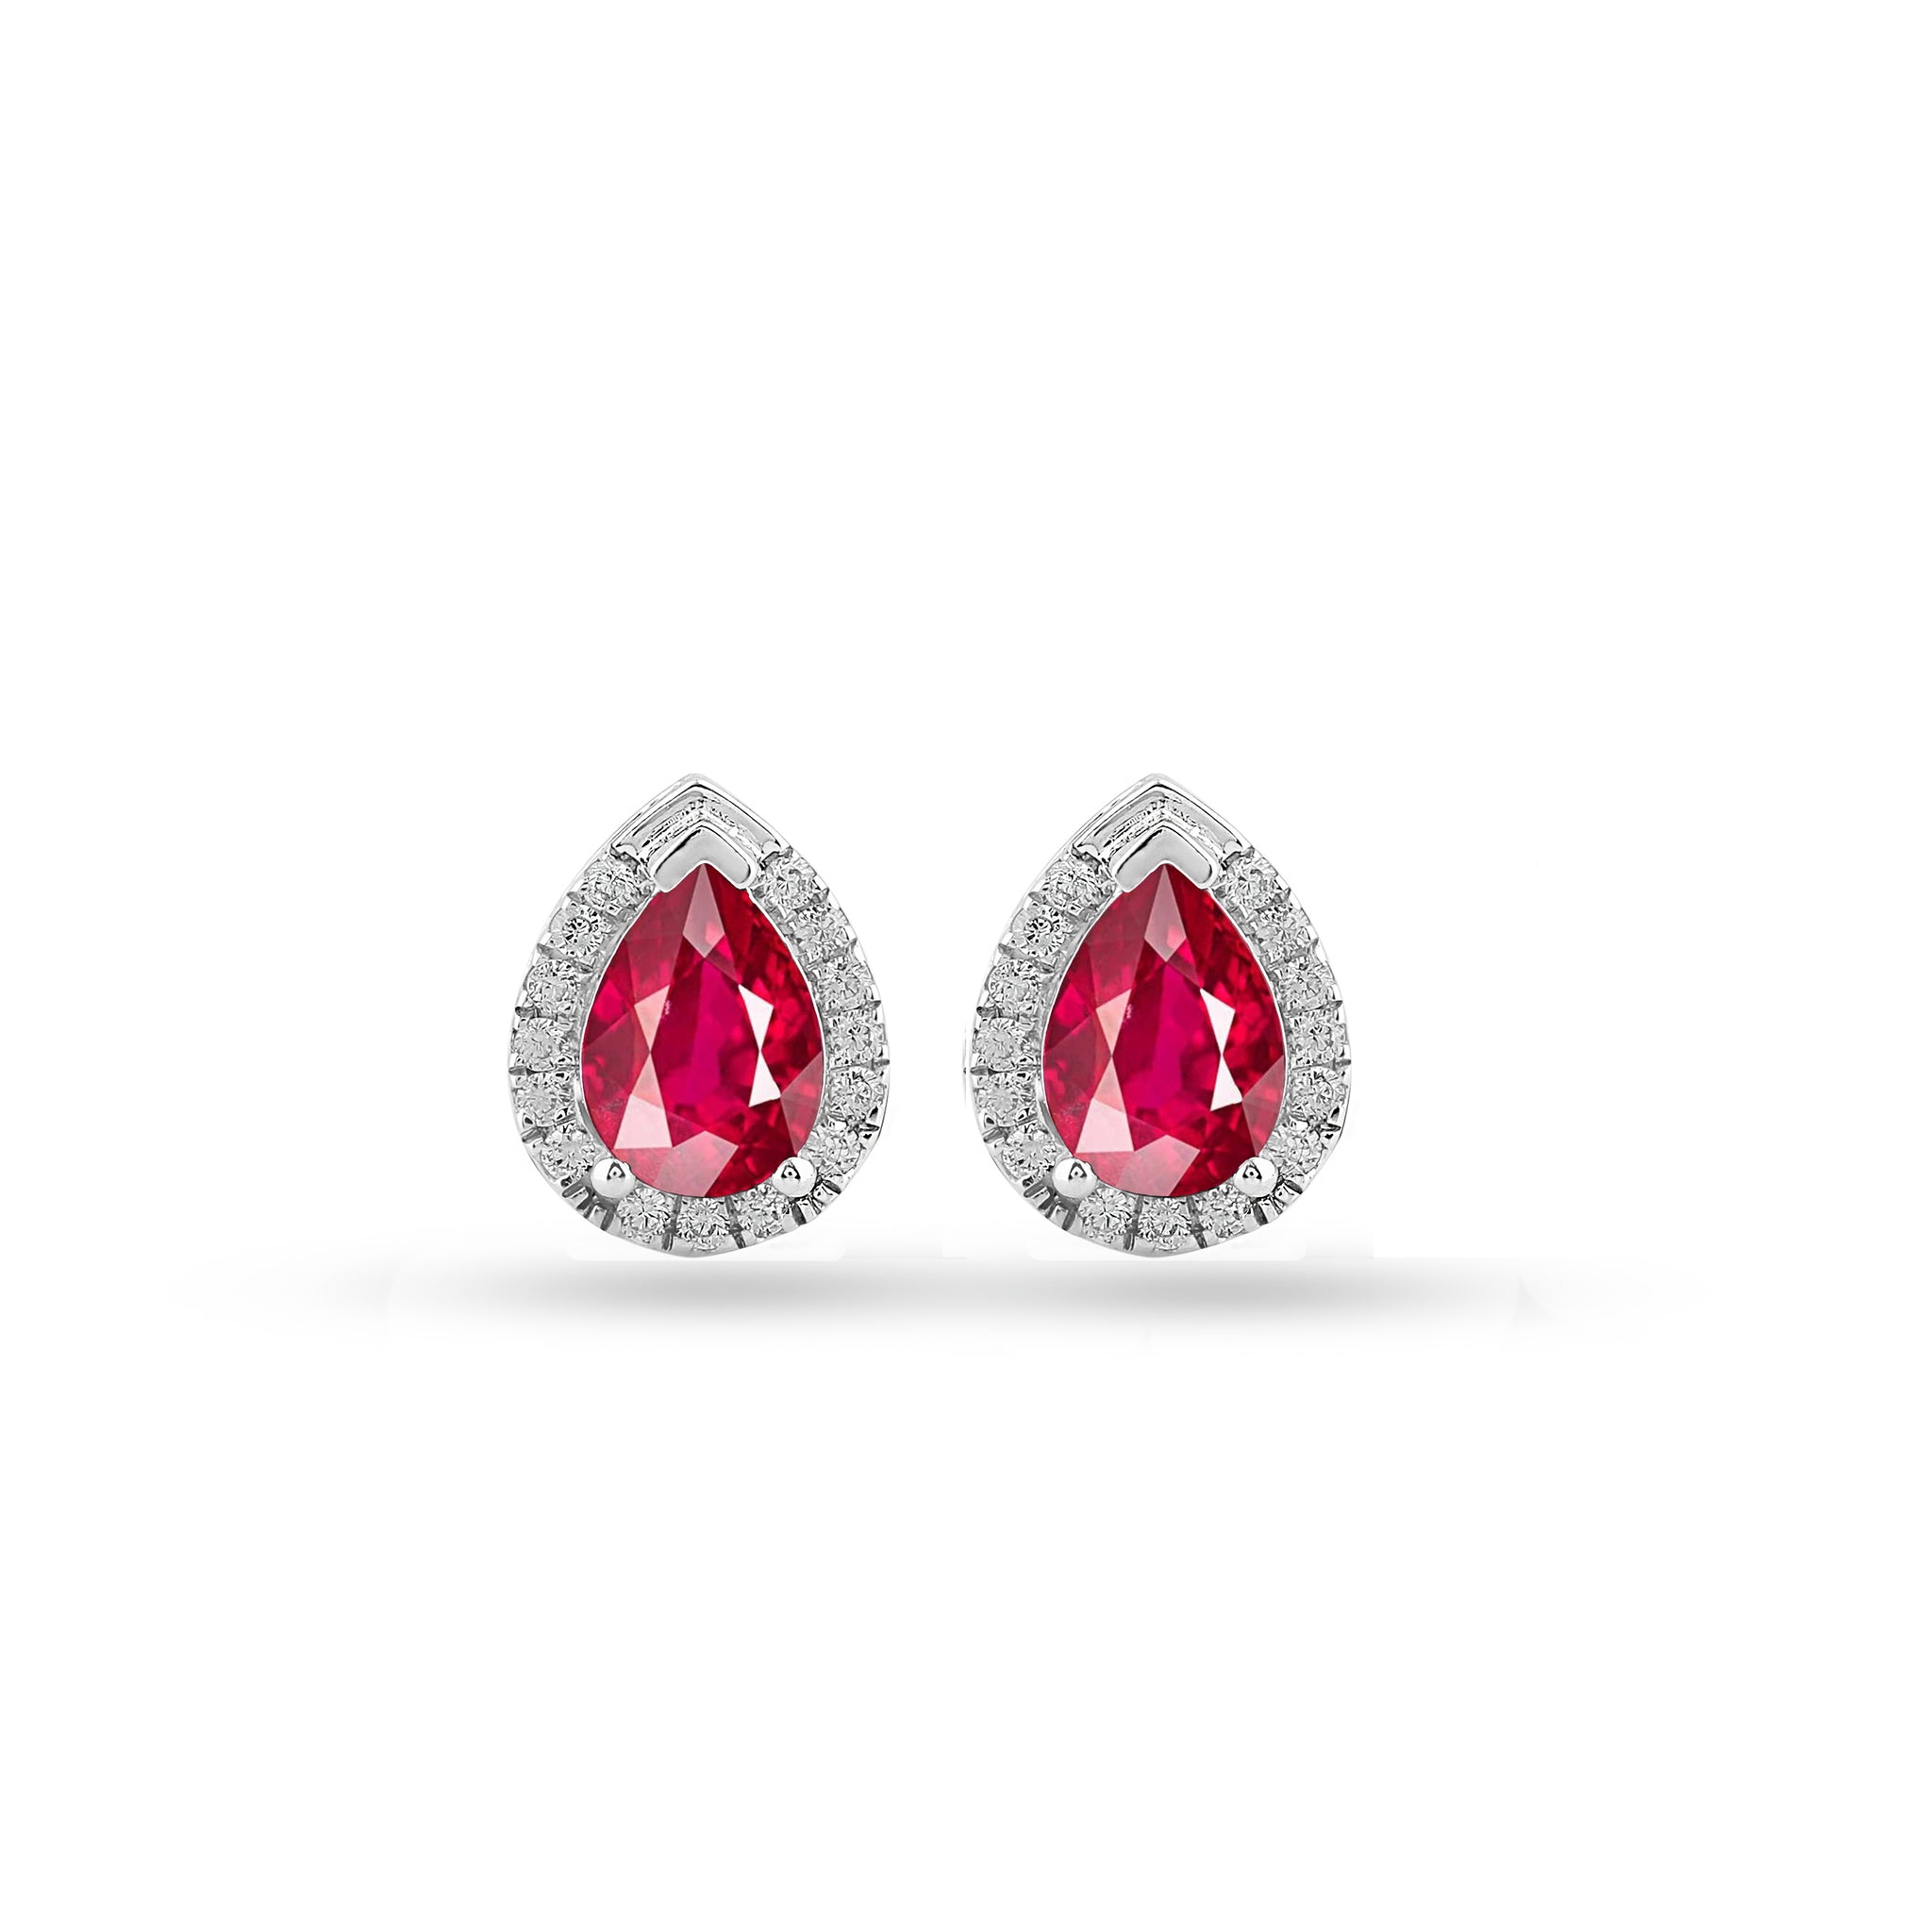 Pair of sparkling pear-shaped ruby stud earrings